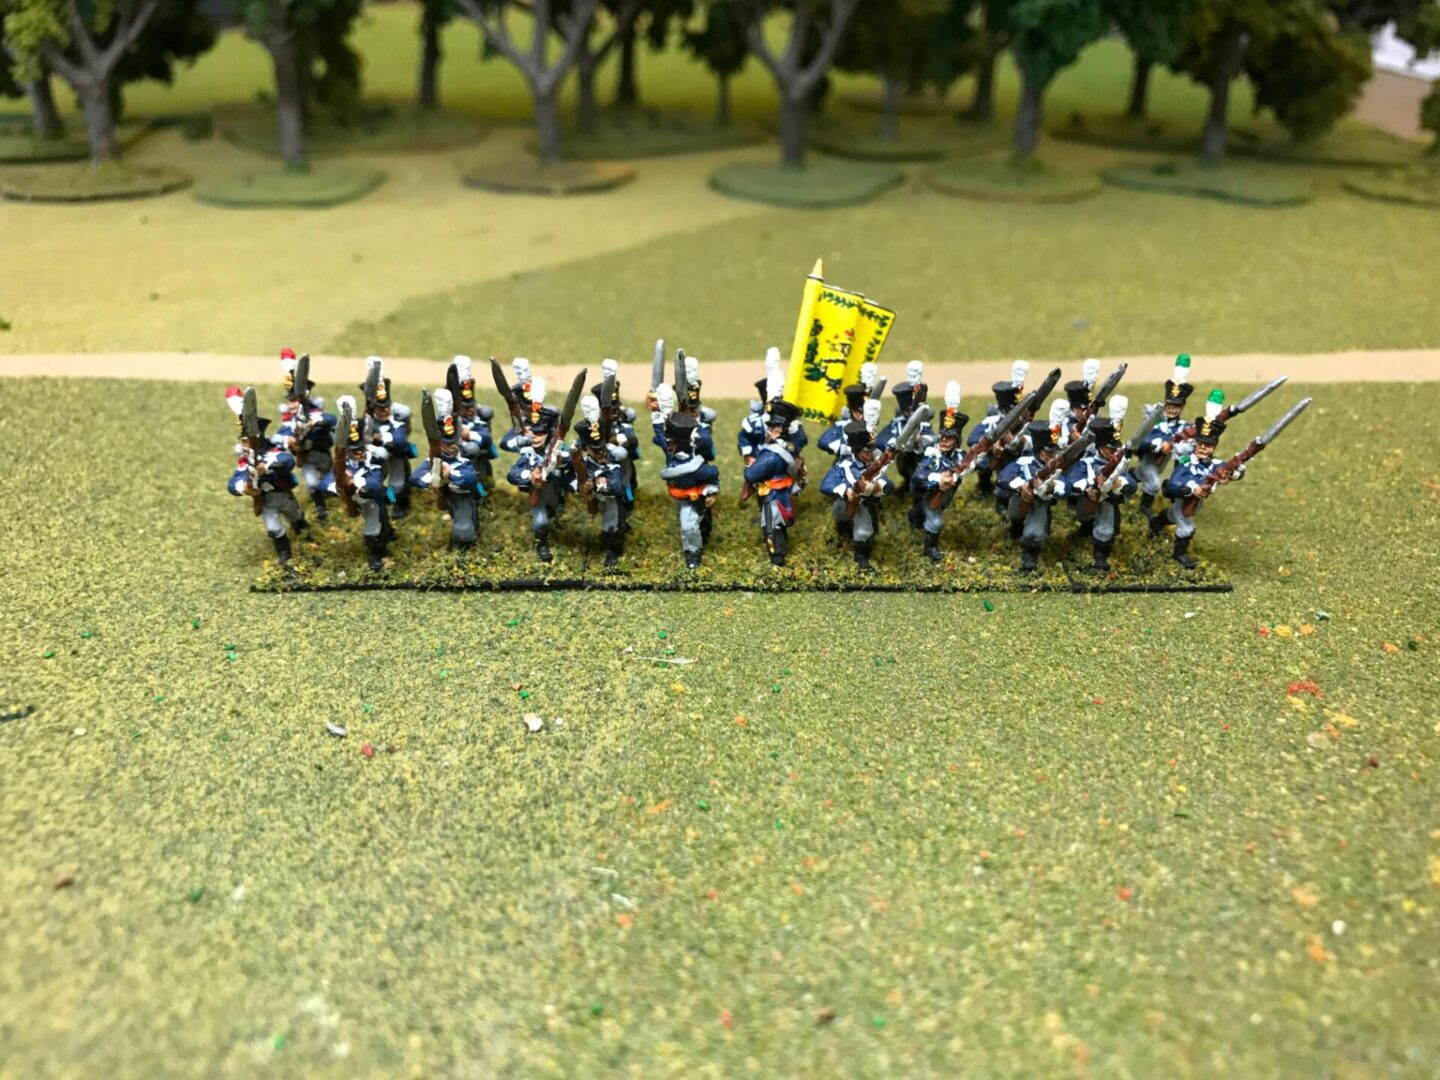 Dutch Infantry